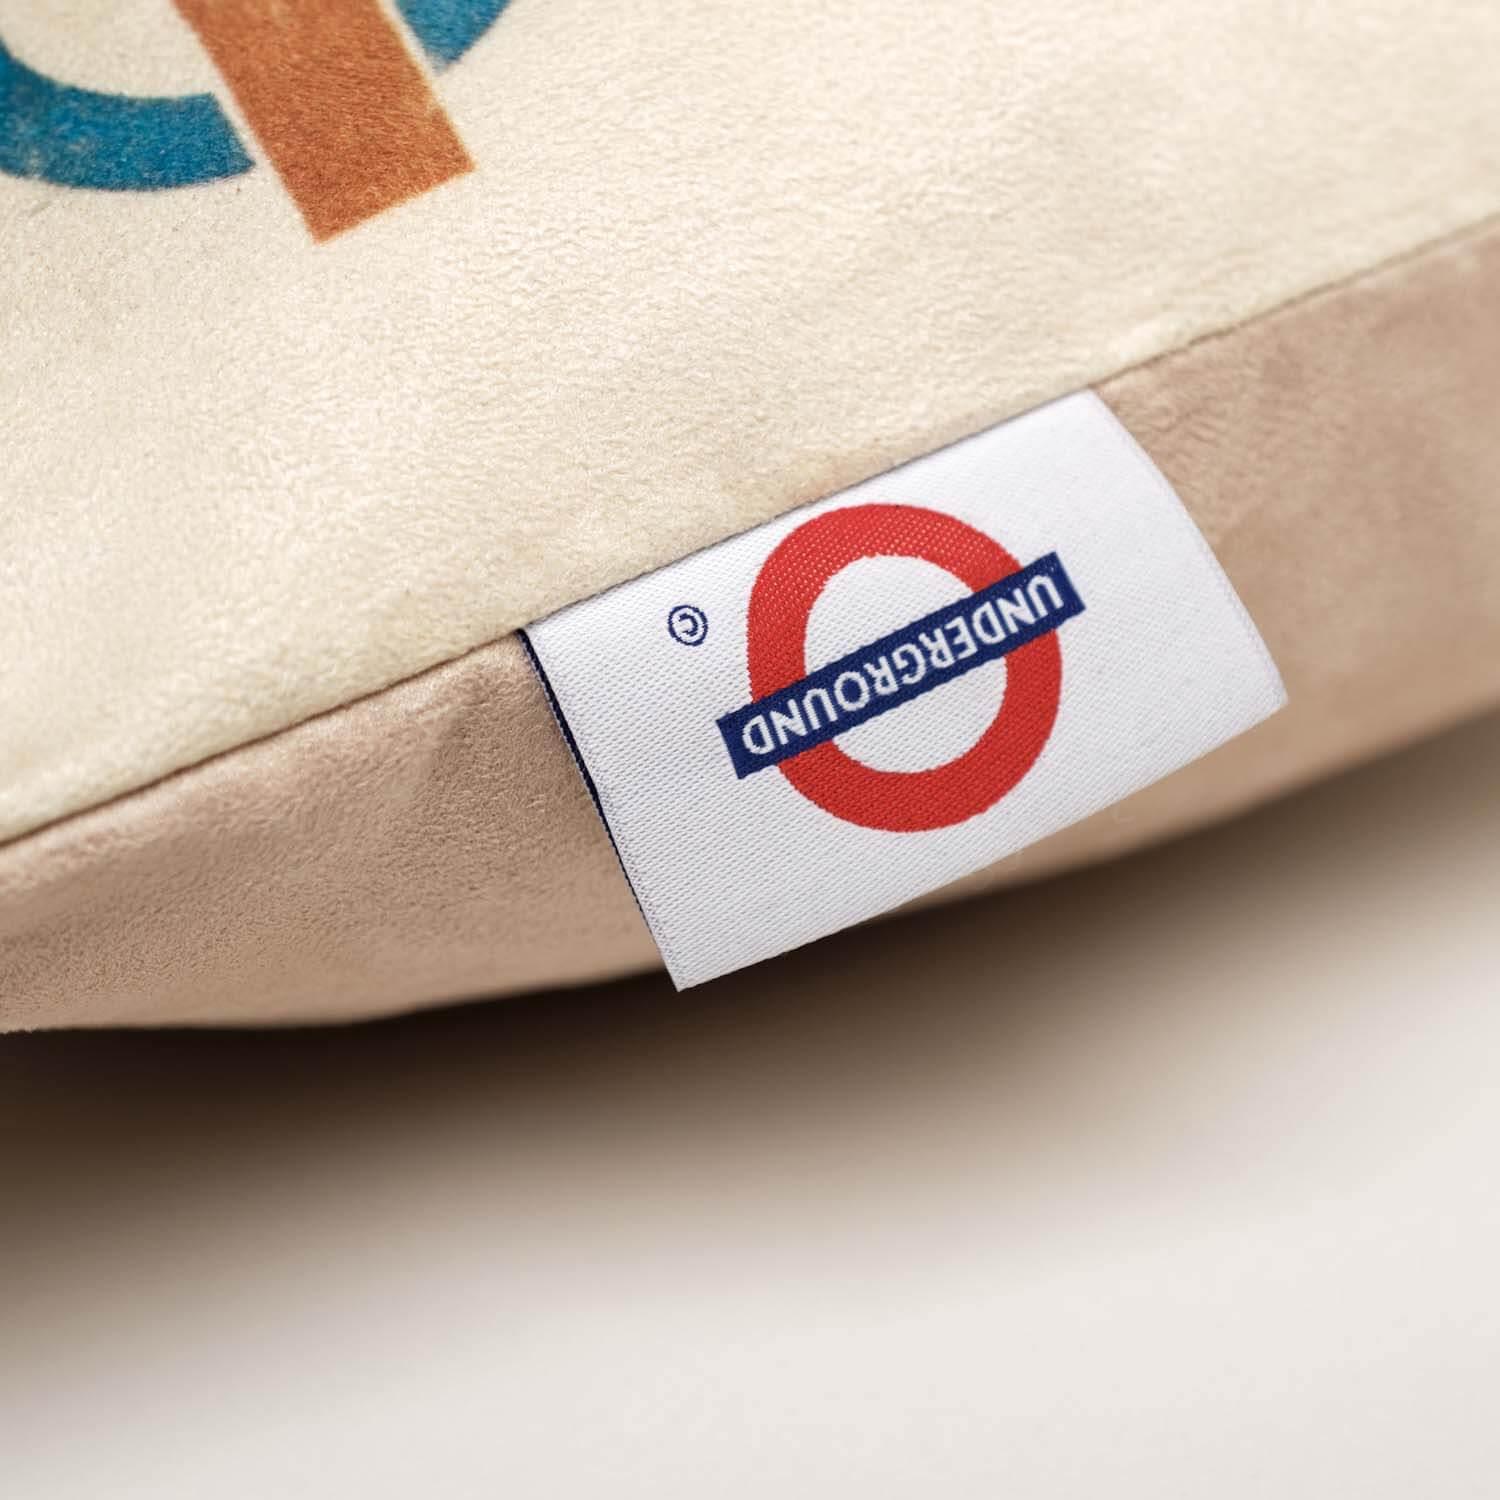 Lure Of London Underground - London Transport Cushion - Handmade Cushions UK - WeLoveCushions